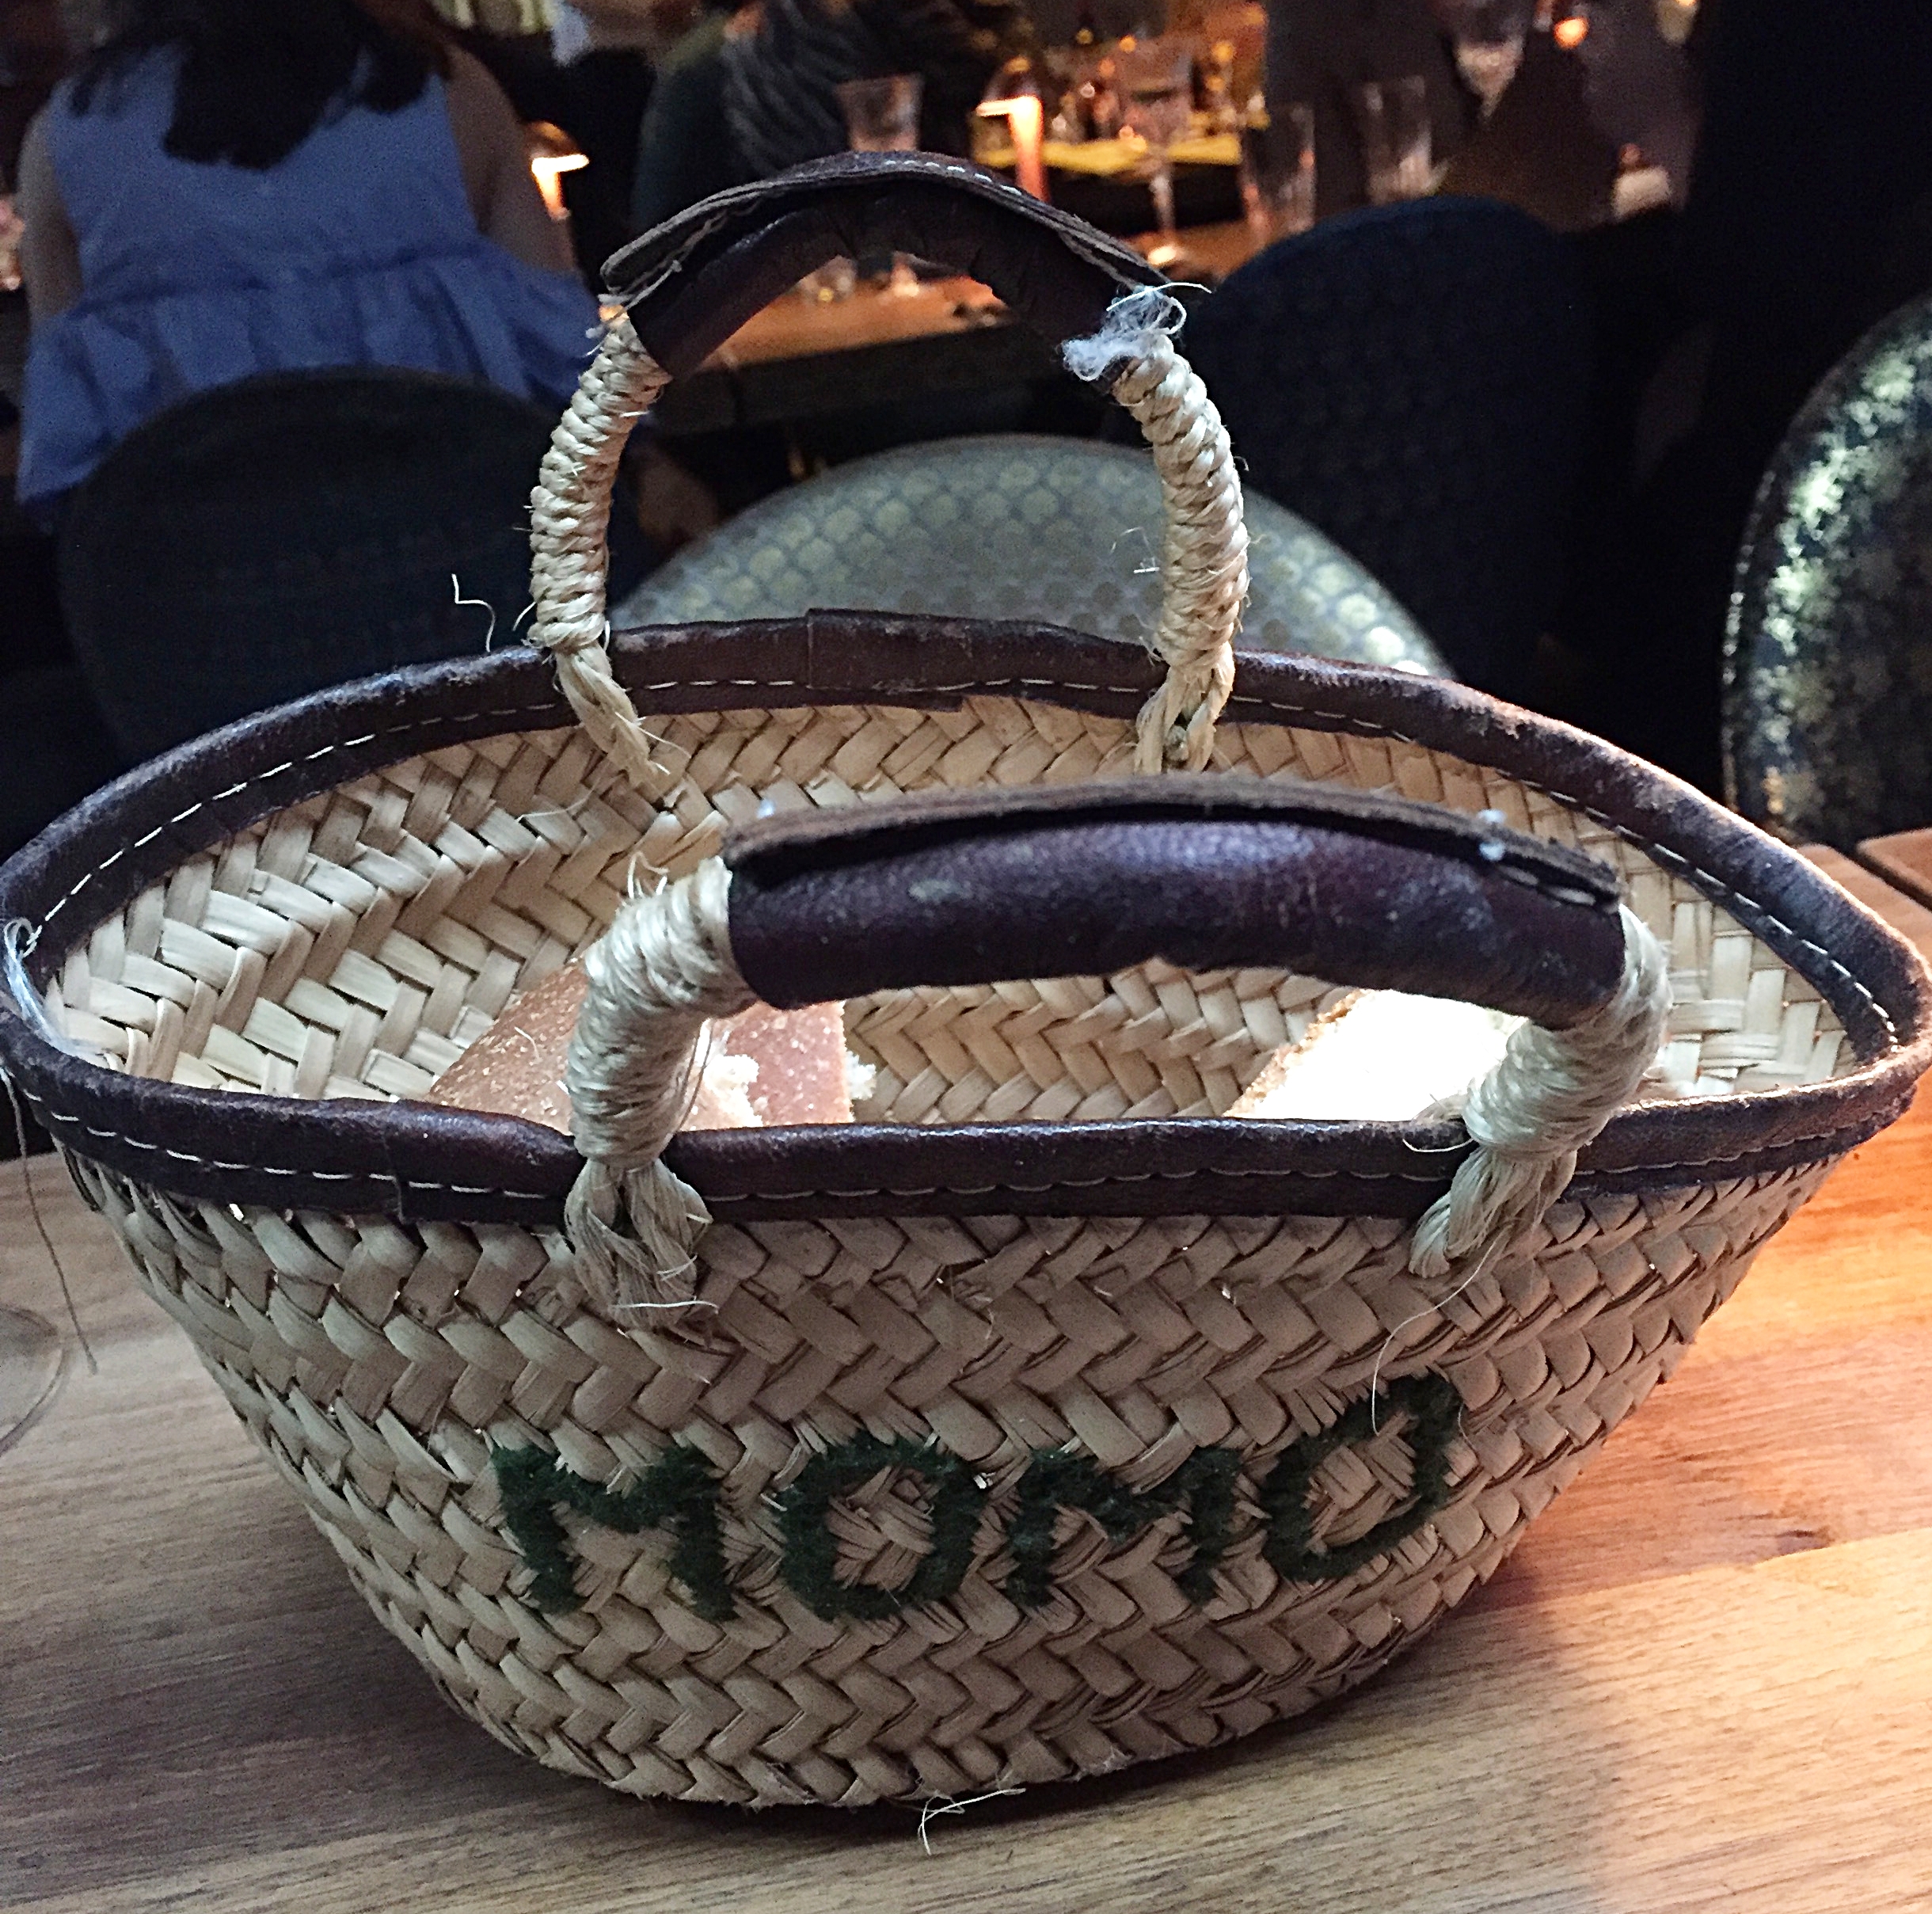 Bread basket - Momo restaurant review, Mayfair London